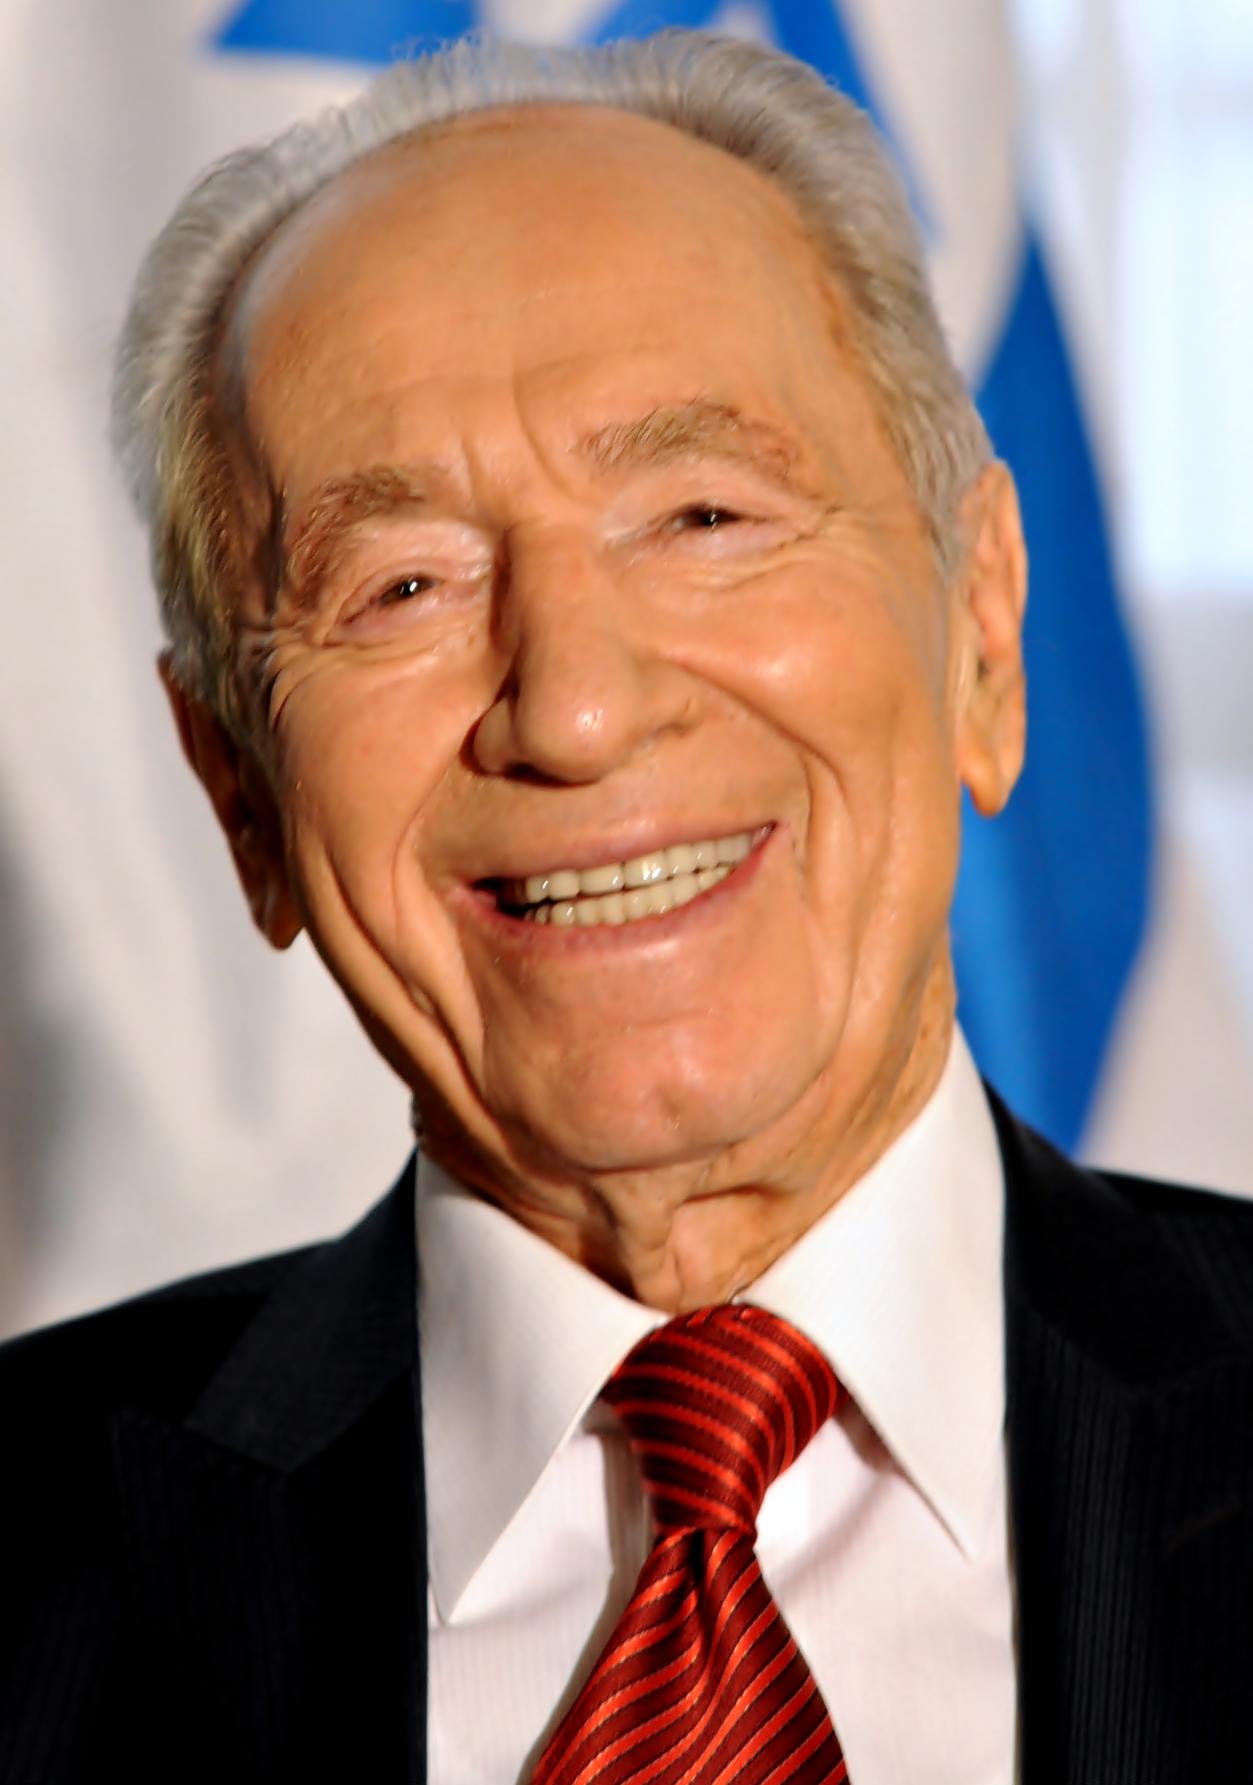 Israeli President Shimon Peres, Nov. 11, 2009. Credit: Elza Fiúza via Wikimedia Commons.